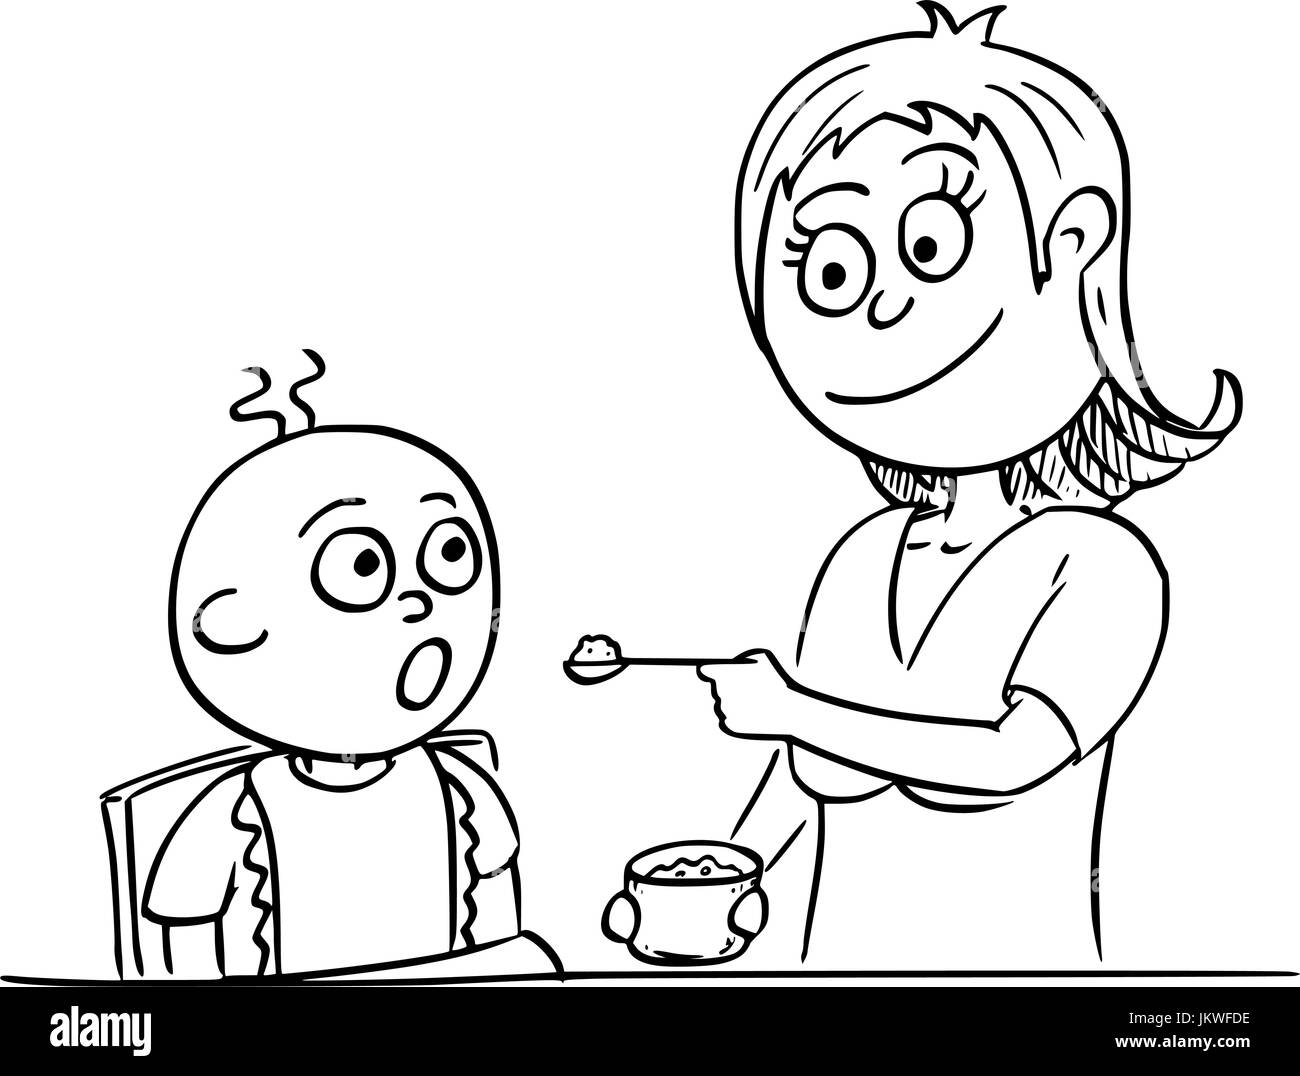 Dessin A La Main Cartoon Vector Illustration De Mere Maman Maman Nourrir Bebe Avec Pap Image Vectorielle Stock Alamy